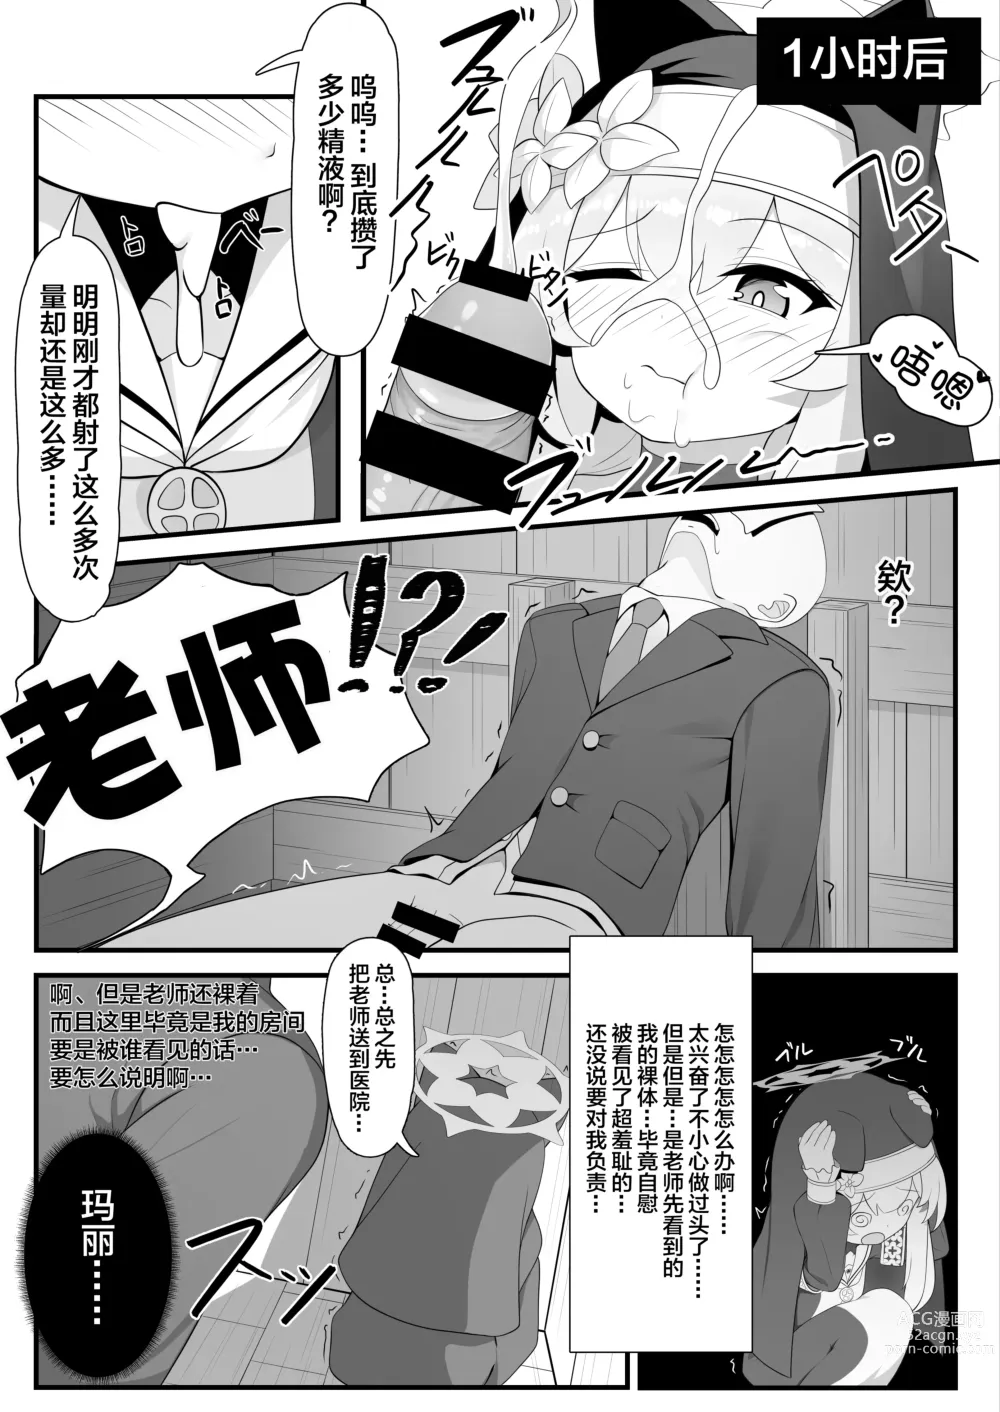 Page 13 of doujinshi Mari no Himitsu